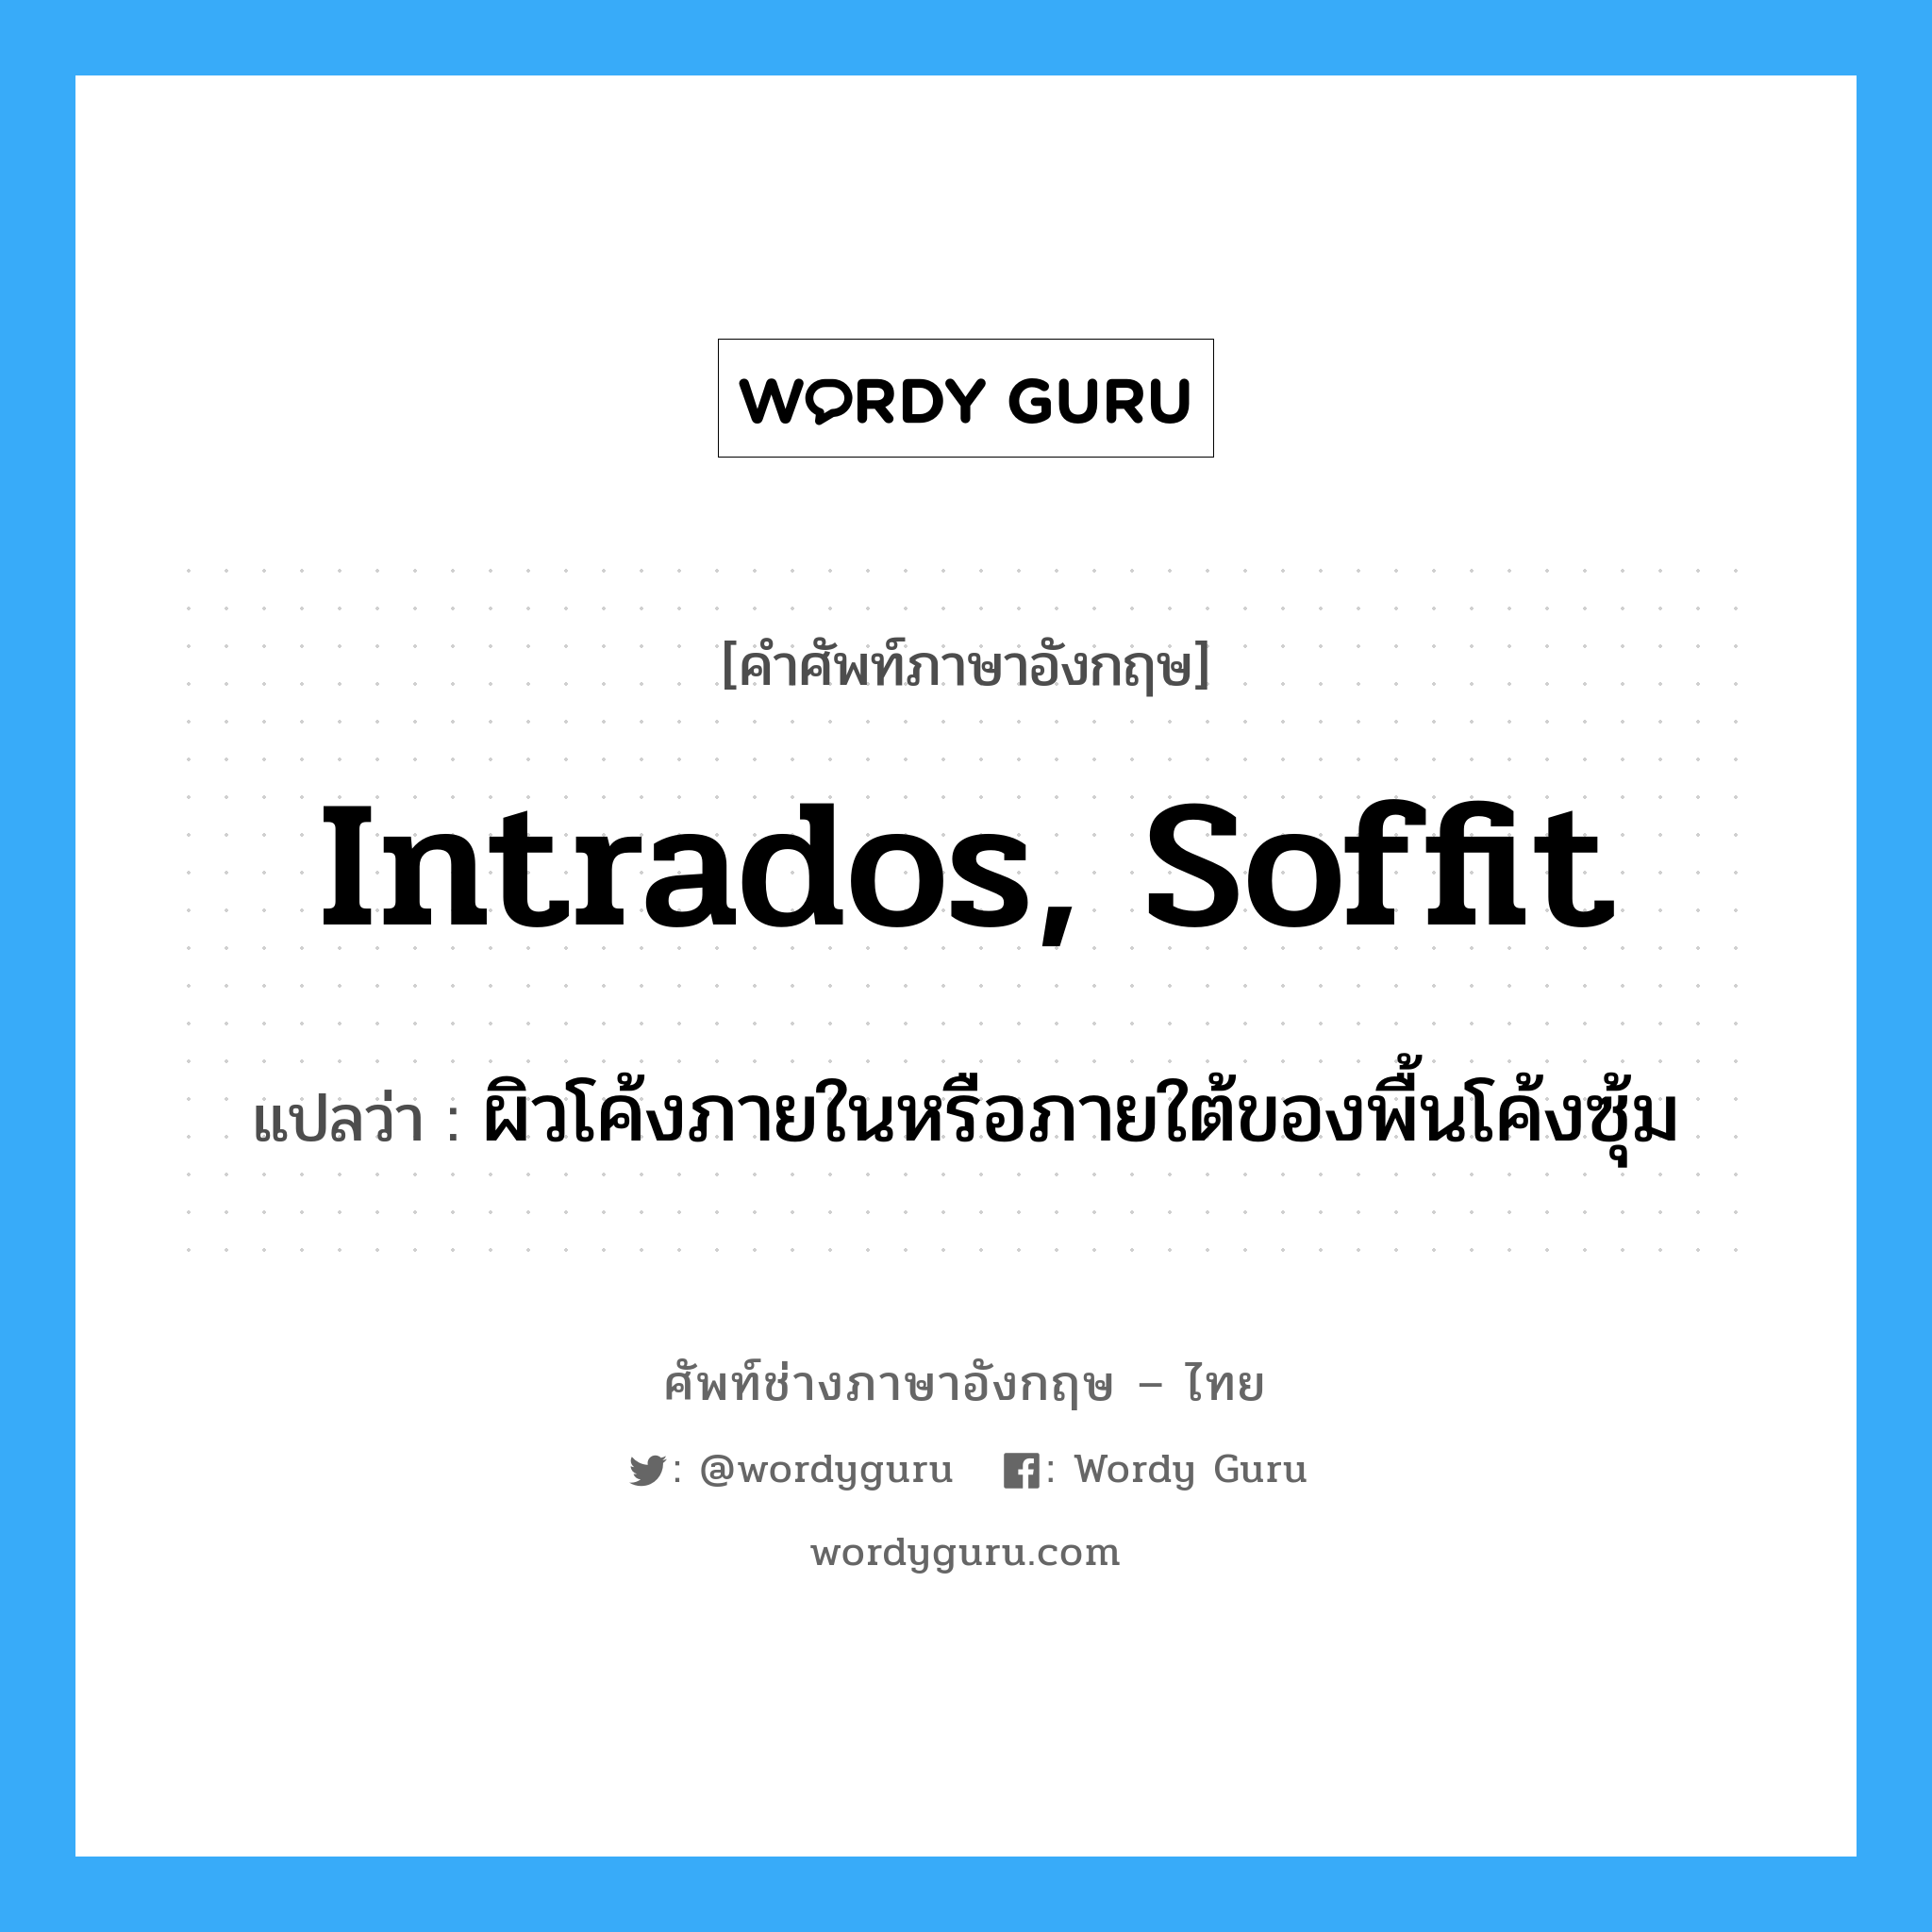 intrados, soffit แปลว่า?, คำศัพท์ช่างภาษาอังกฤษ - ไทย intrados, soffit คำศัพท์ภาษาอังกฤษ intrados, soffit แปลว่า ผิวโค้งภายในหรือภายใต้ของพื้นโค้งซุ้ม